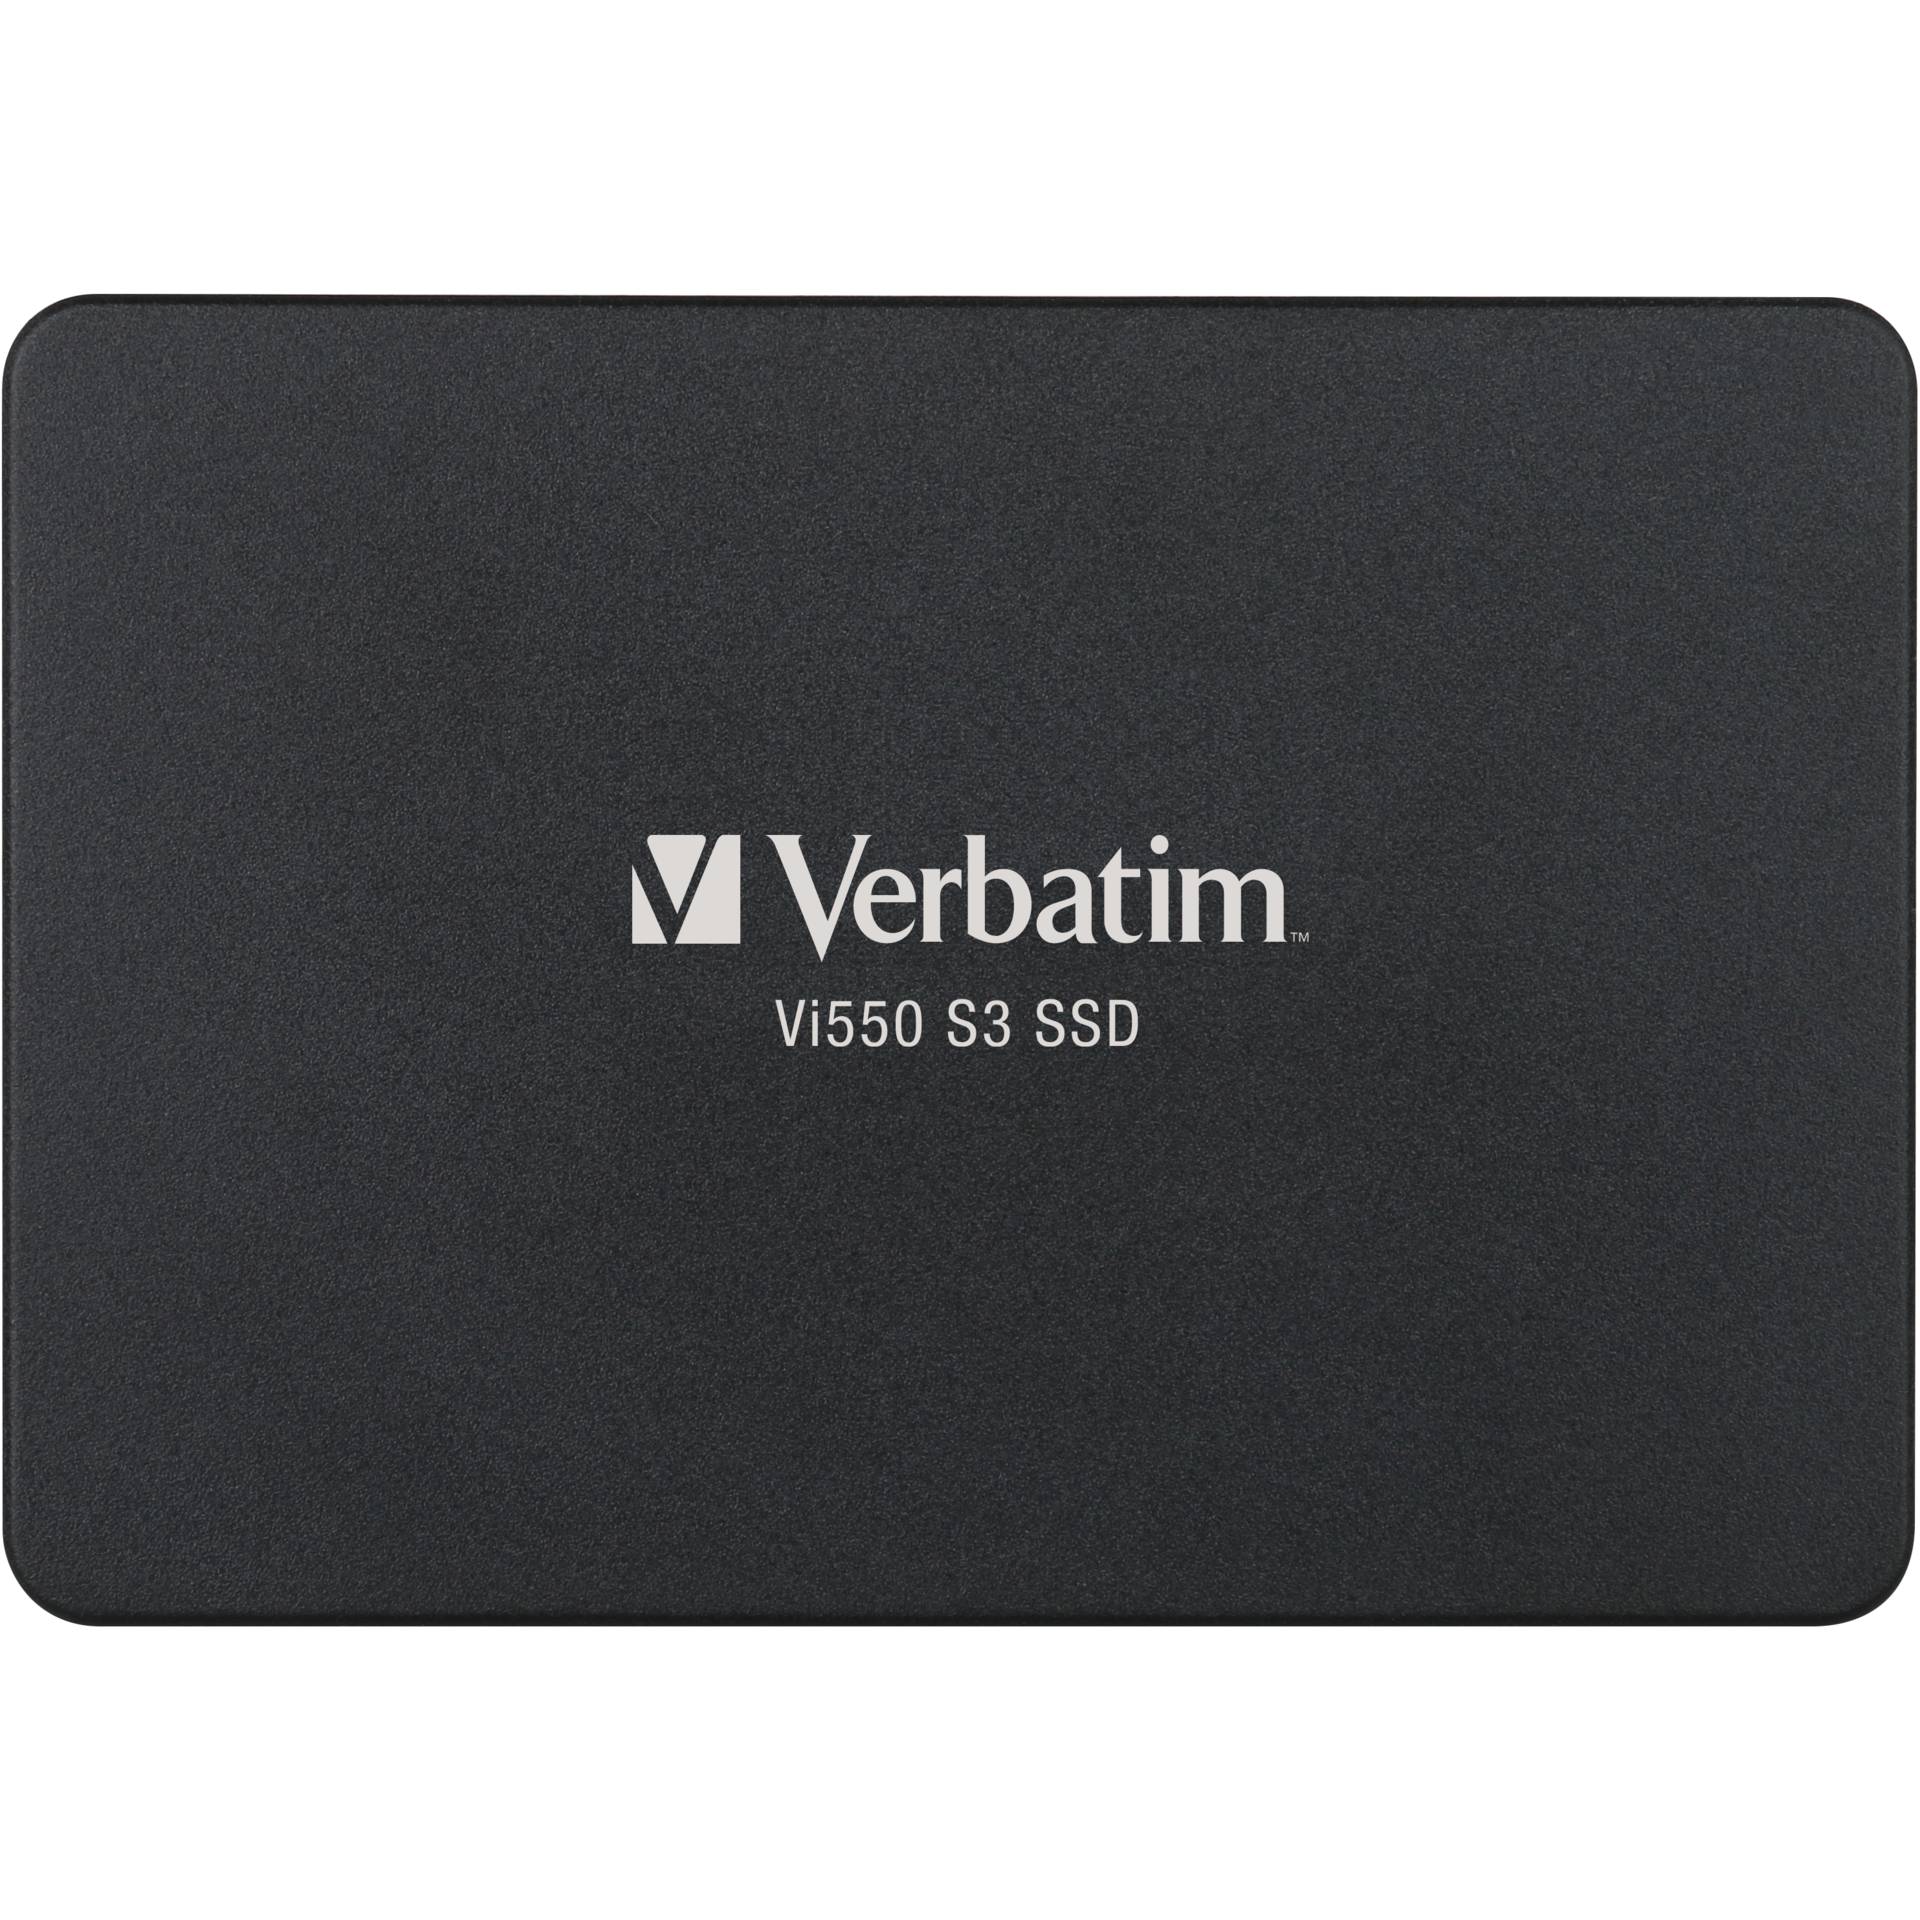 256 GB SSD Verbatim Vi550 S3 SSD, SATA 6Gb/s, lesen: 560MB/s, schreiben: 460MB/s, TBW: 150TB